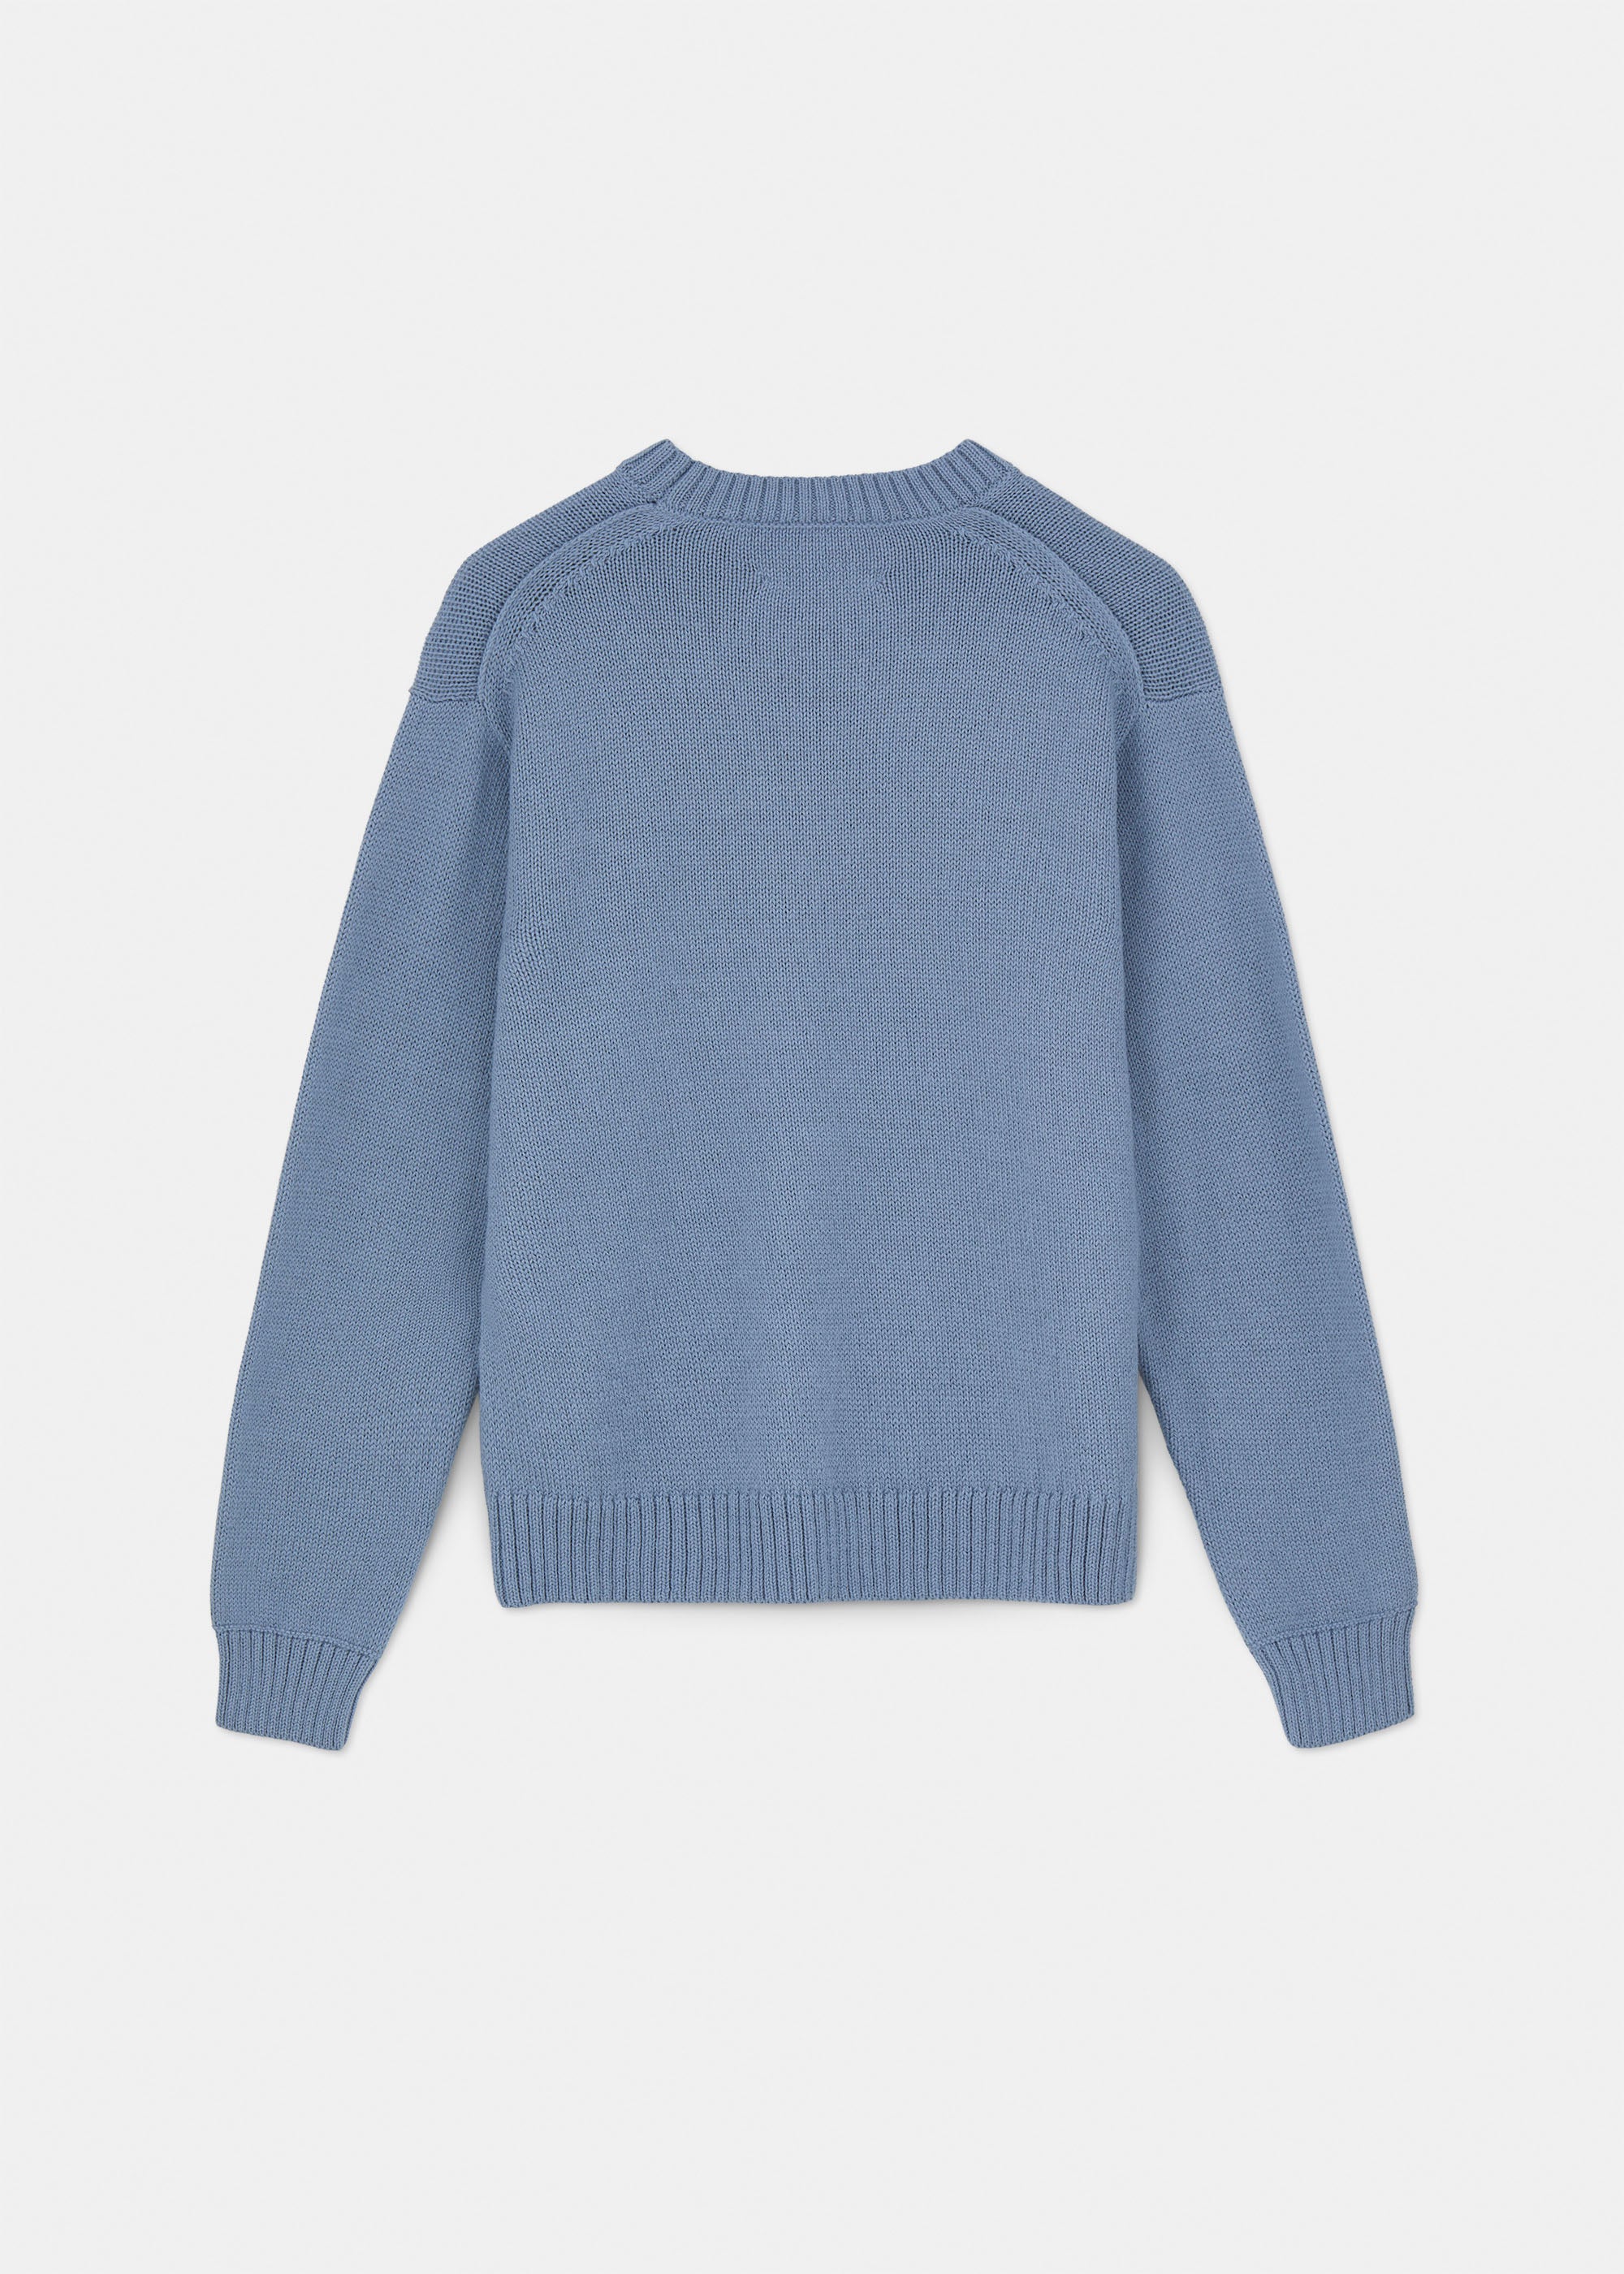 Highland saga wool sweater | Anemone